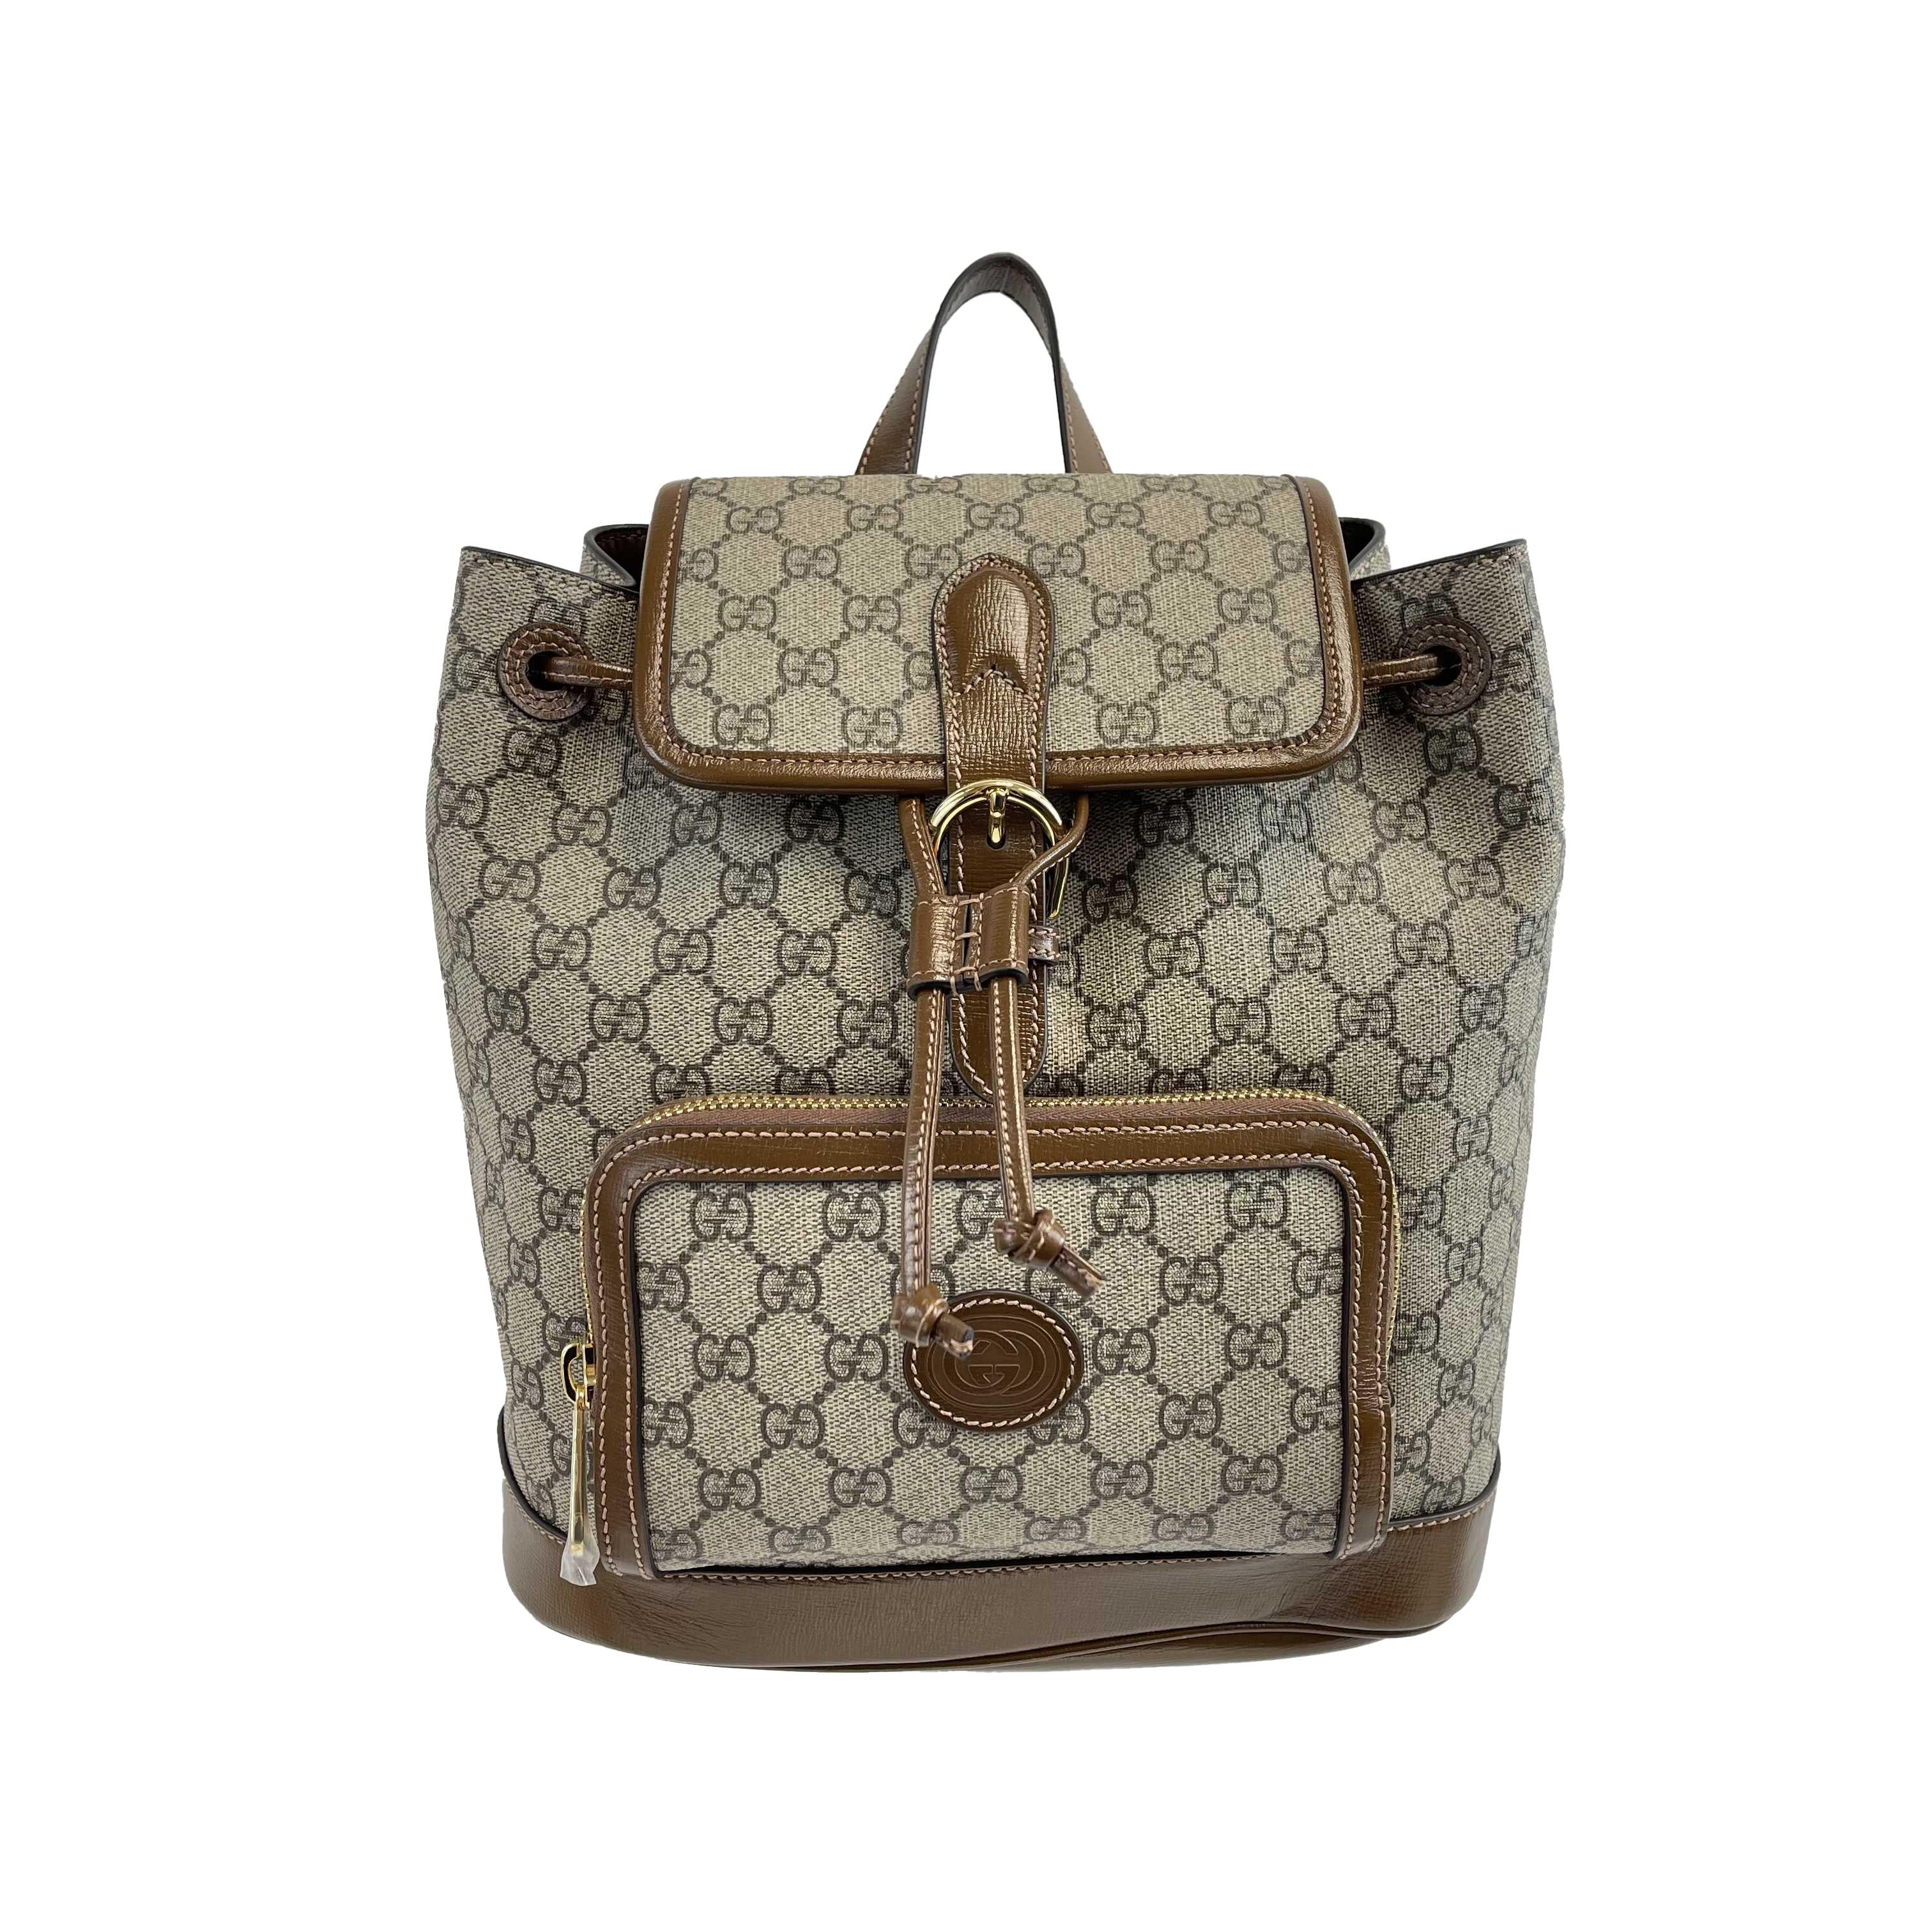 Gucci - NEW Backpack With Interlocking G - Beige / Brown Monogram Backpack 4